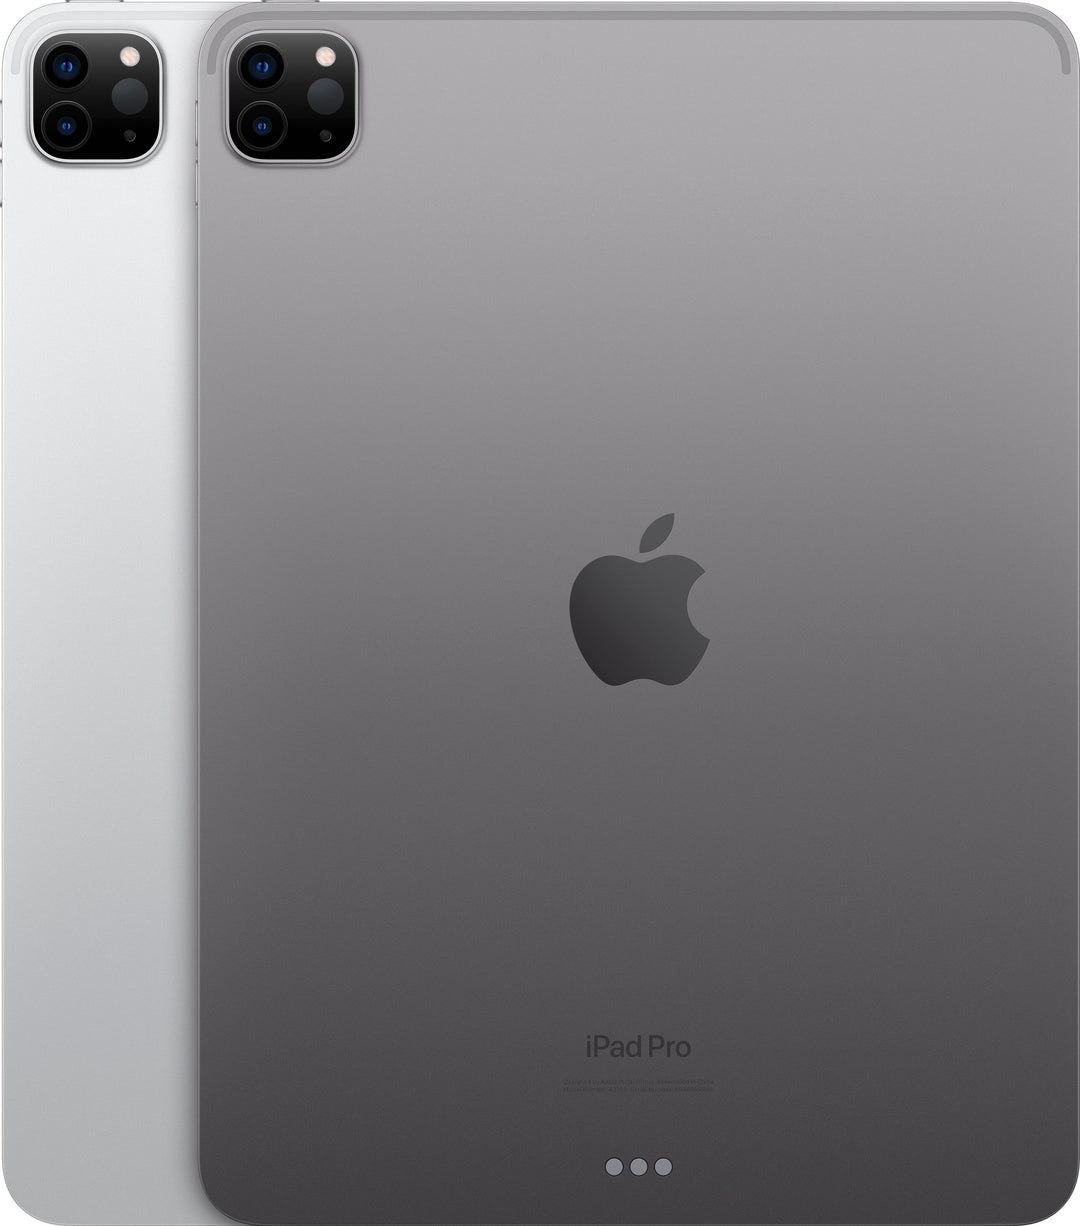 Apple - 12.9-Inch iPad Pro (Latest Model) with Wi-Fi - 256GB - Silver_5